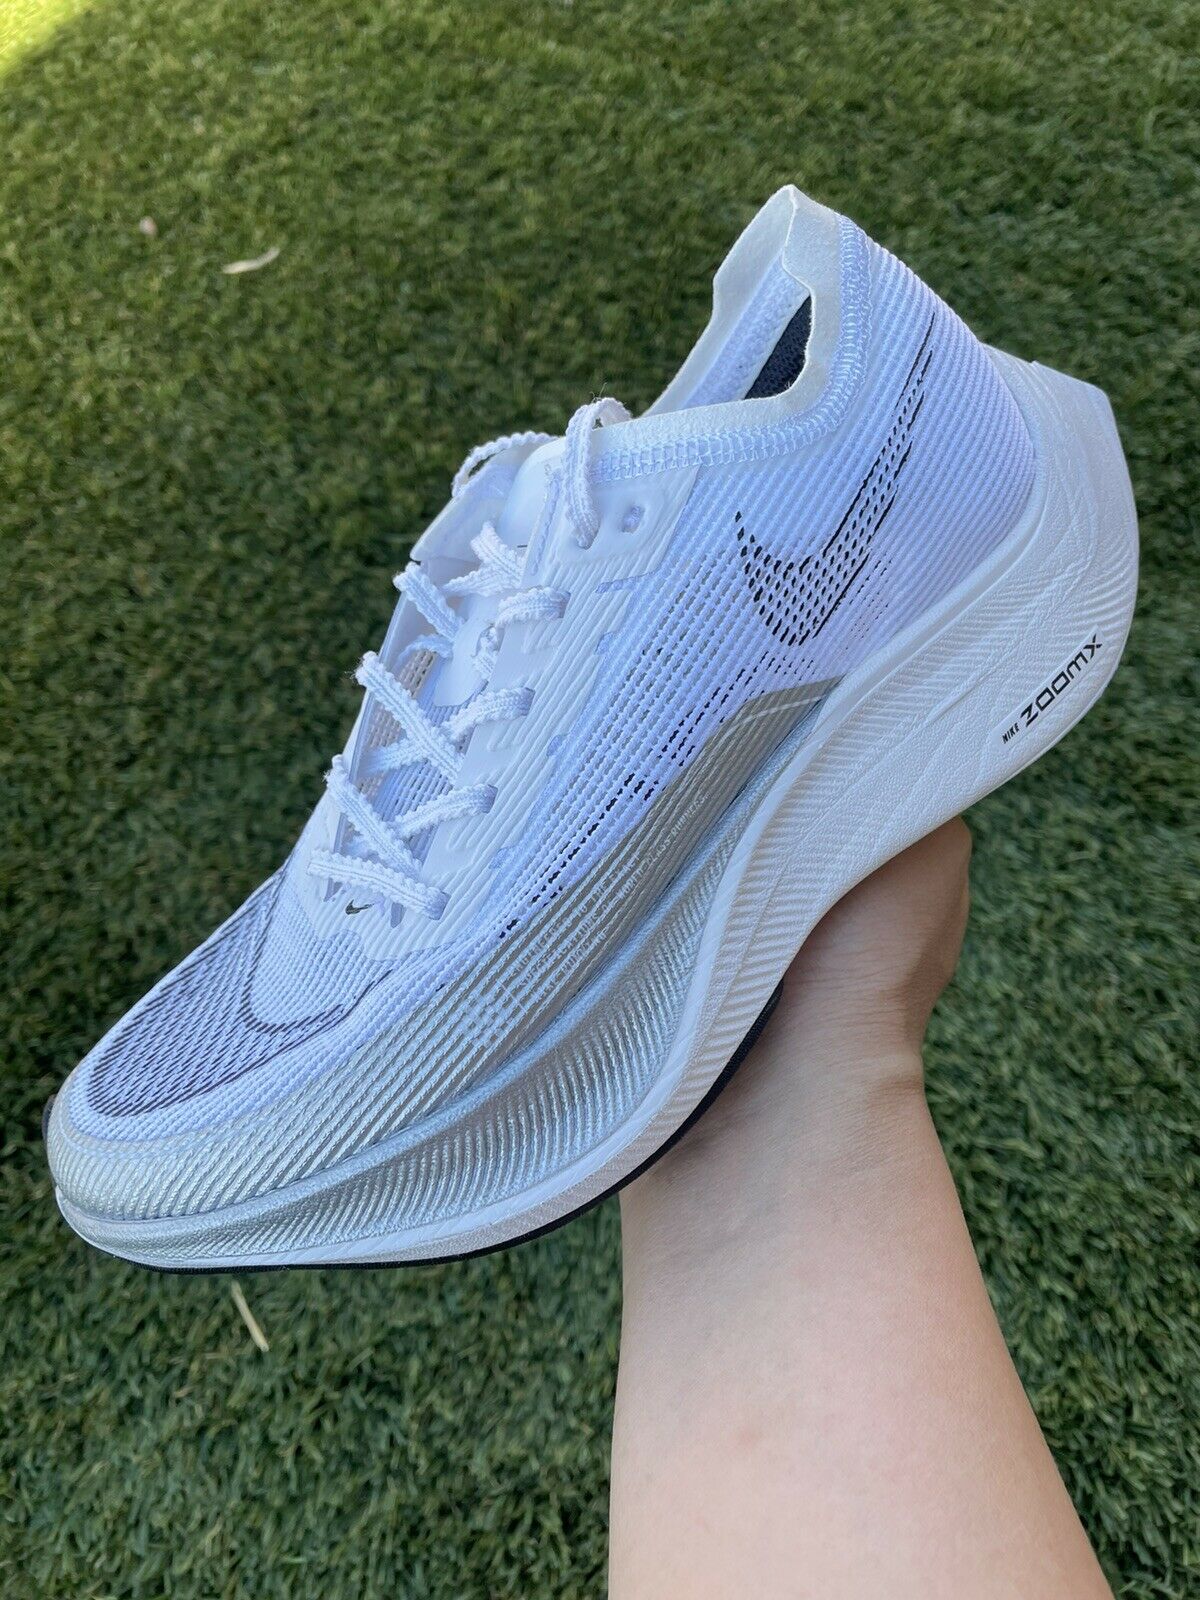 NEW Women’s Nike Air Zoom Vaporfly Next% 2 White Running Shoes CU4123-100 Sz 5.5